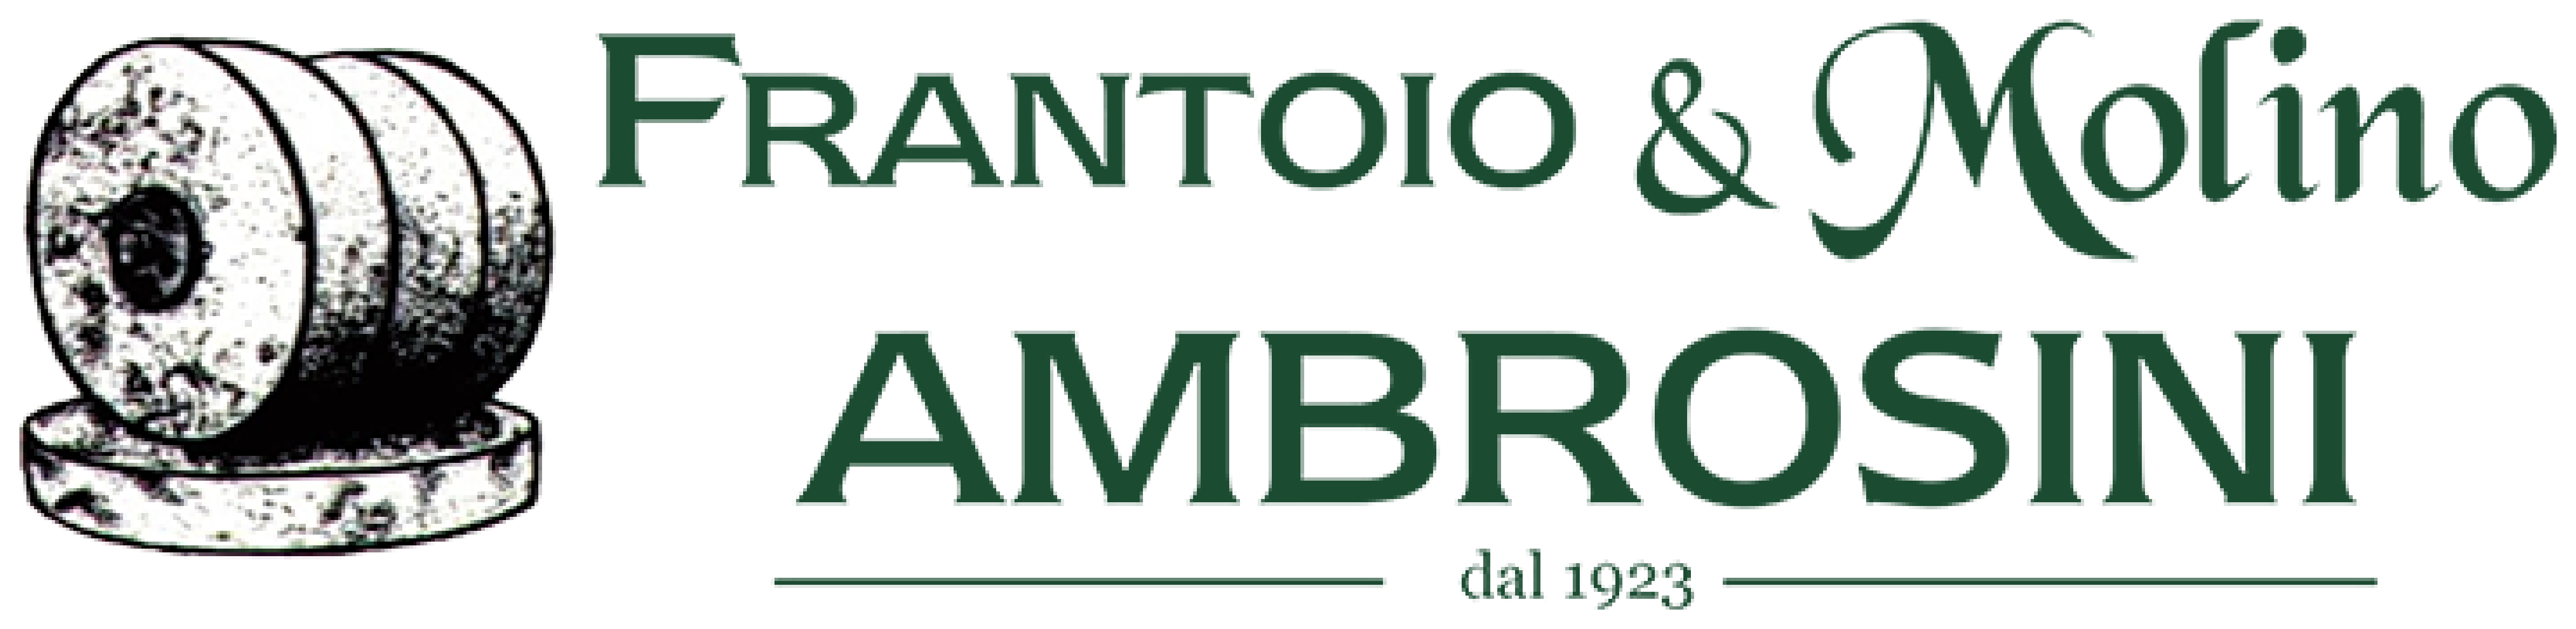 Frantoio Ambrosini